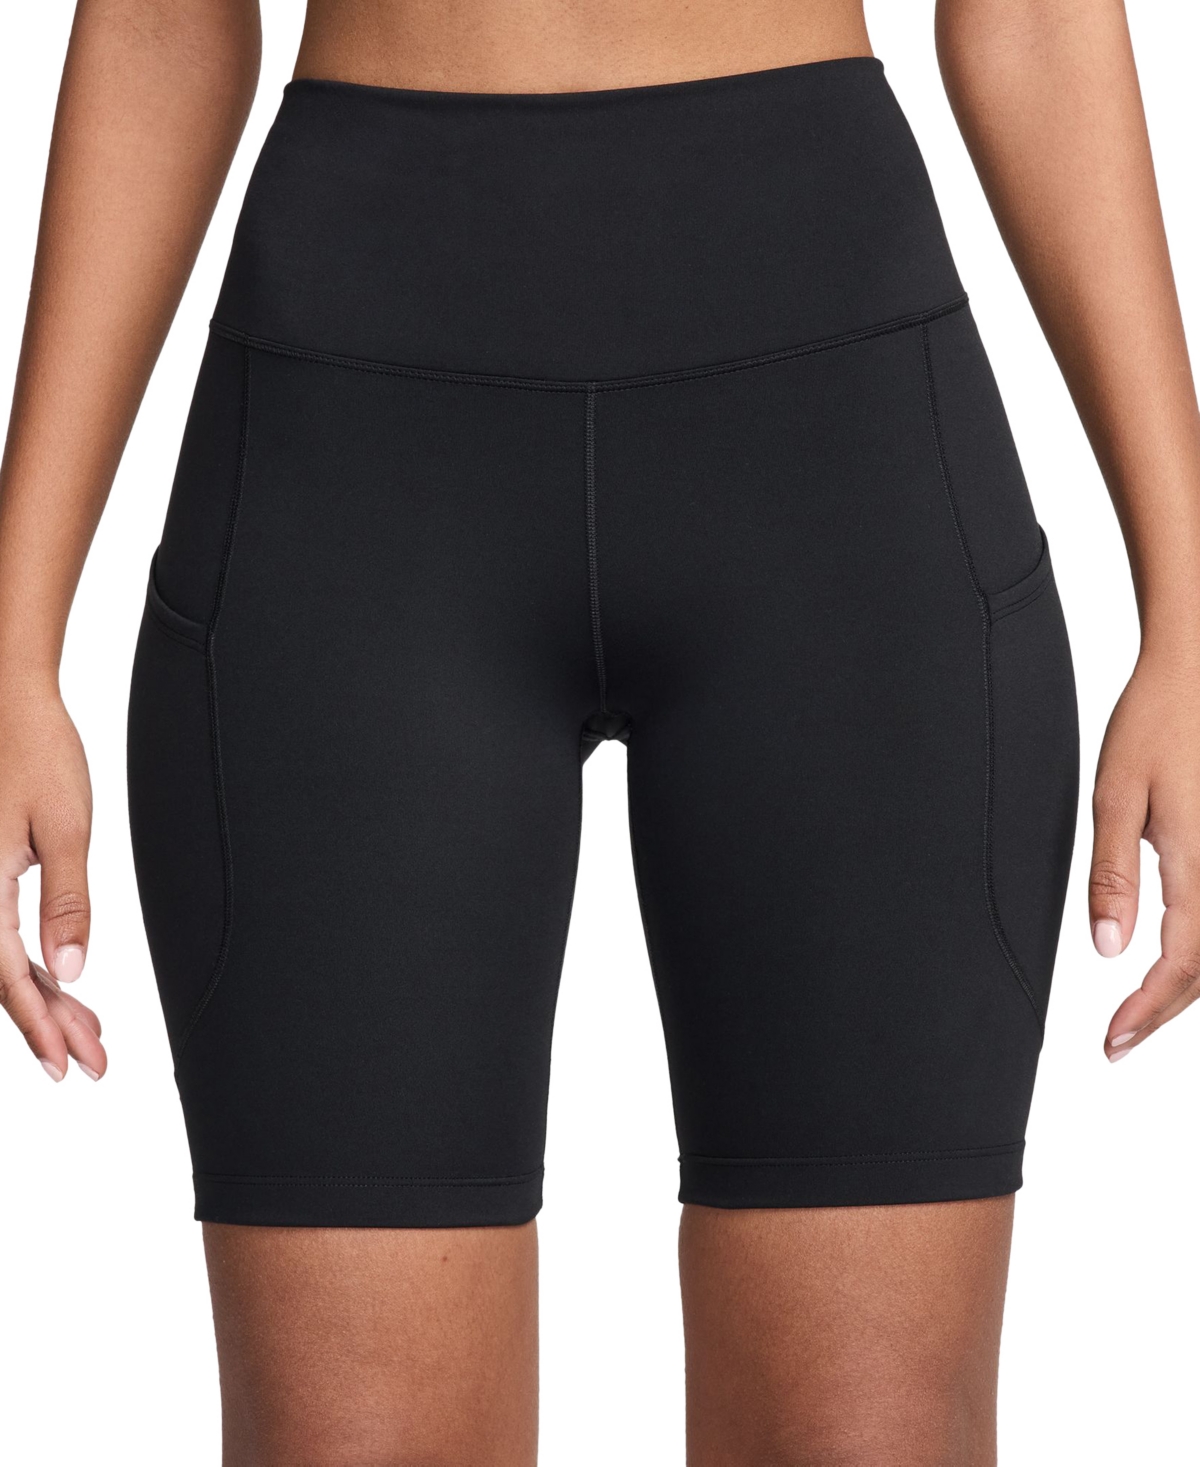 Women's One High-Waisted Side-Pocket Bike Shorts - Black/black